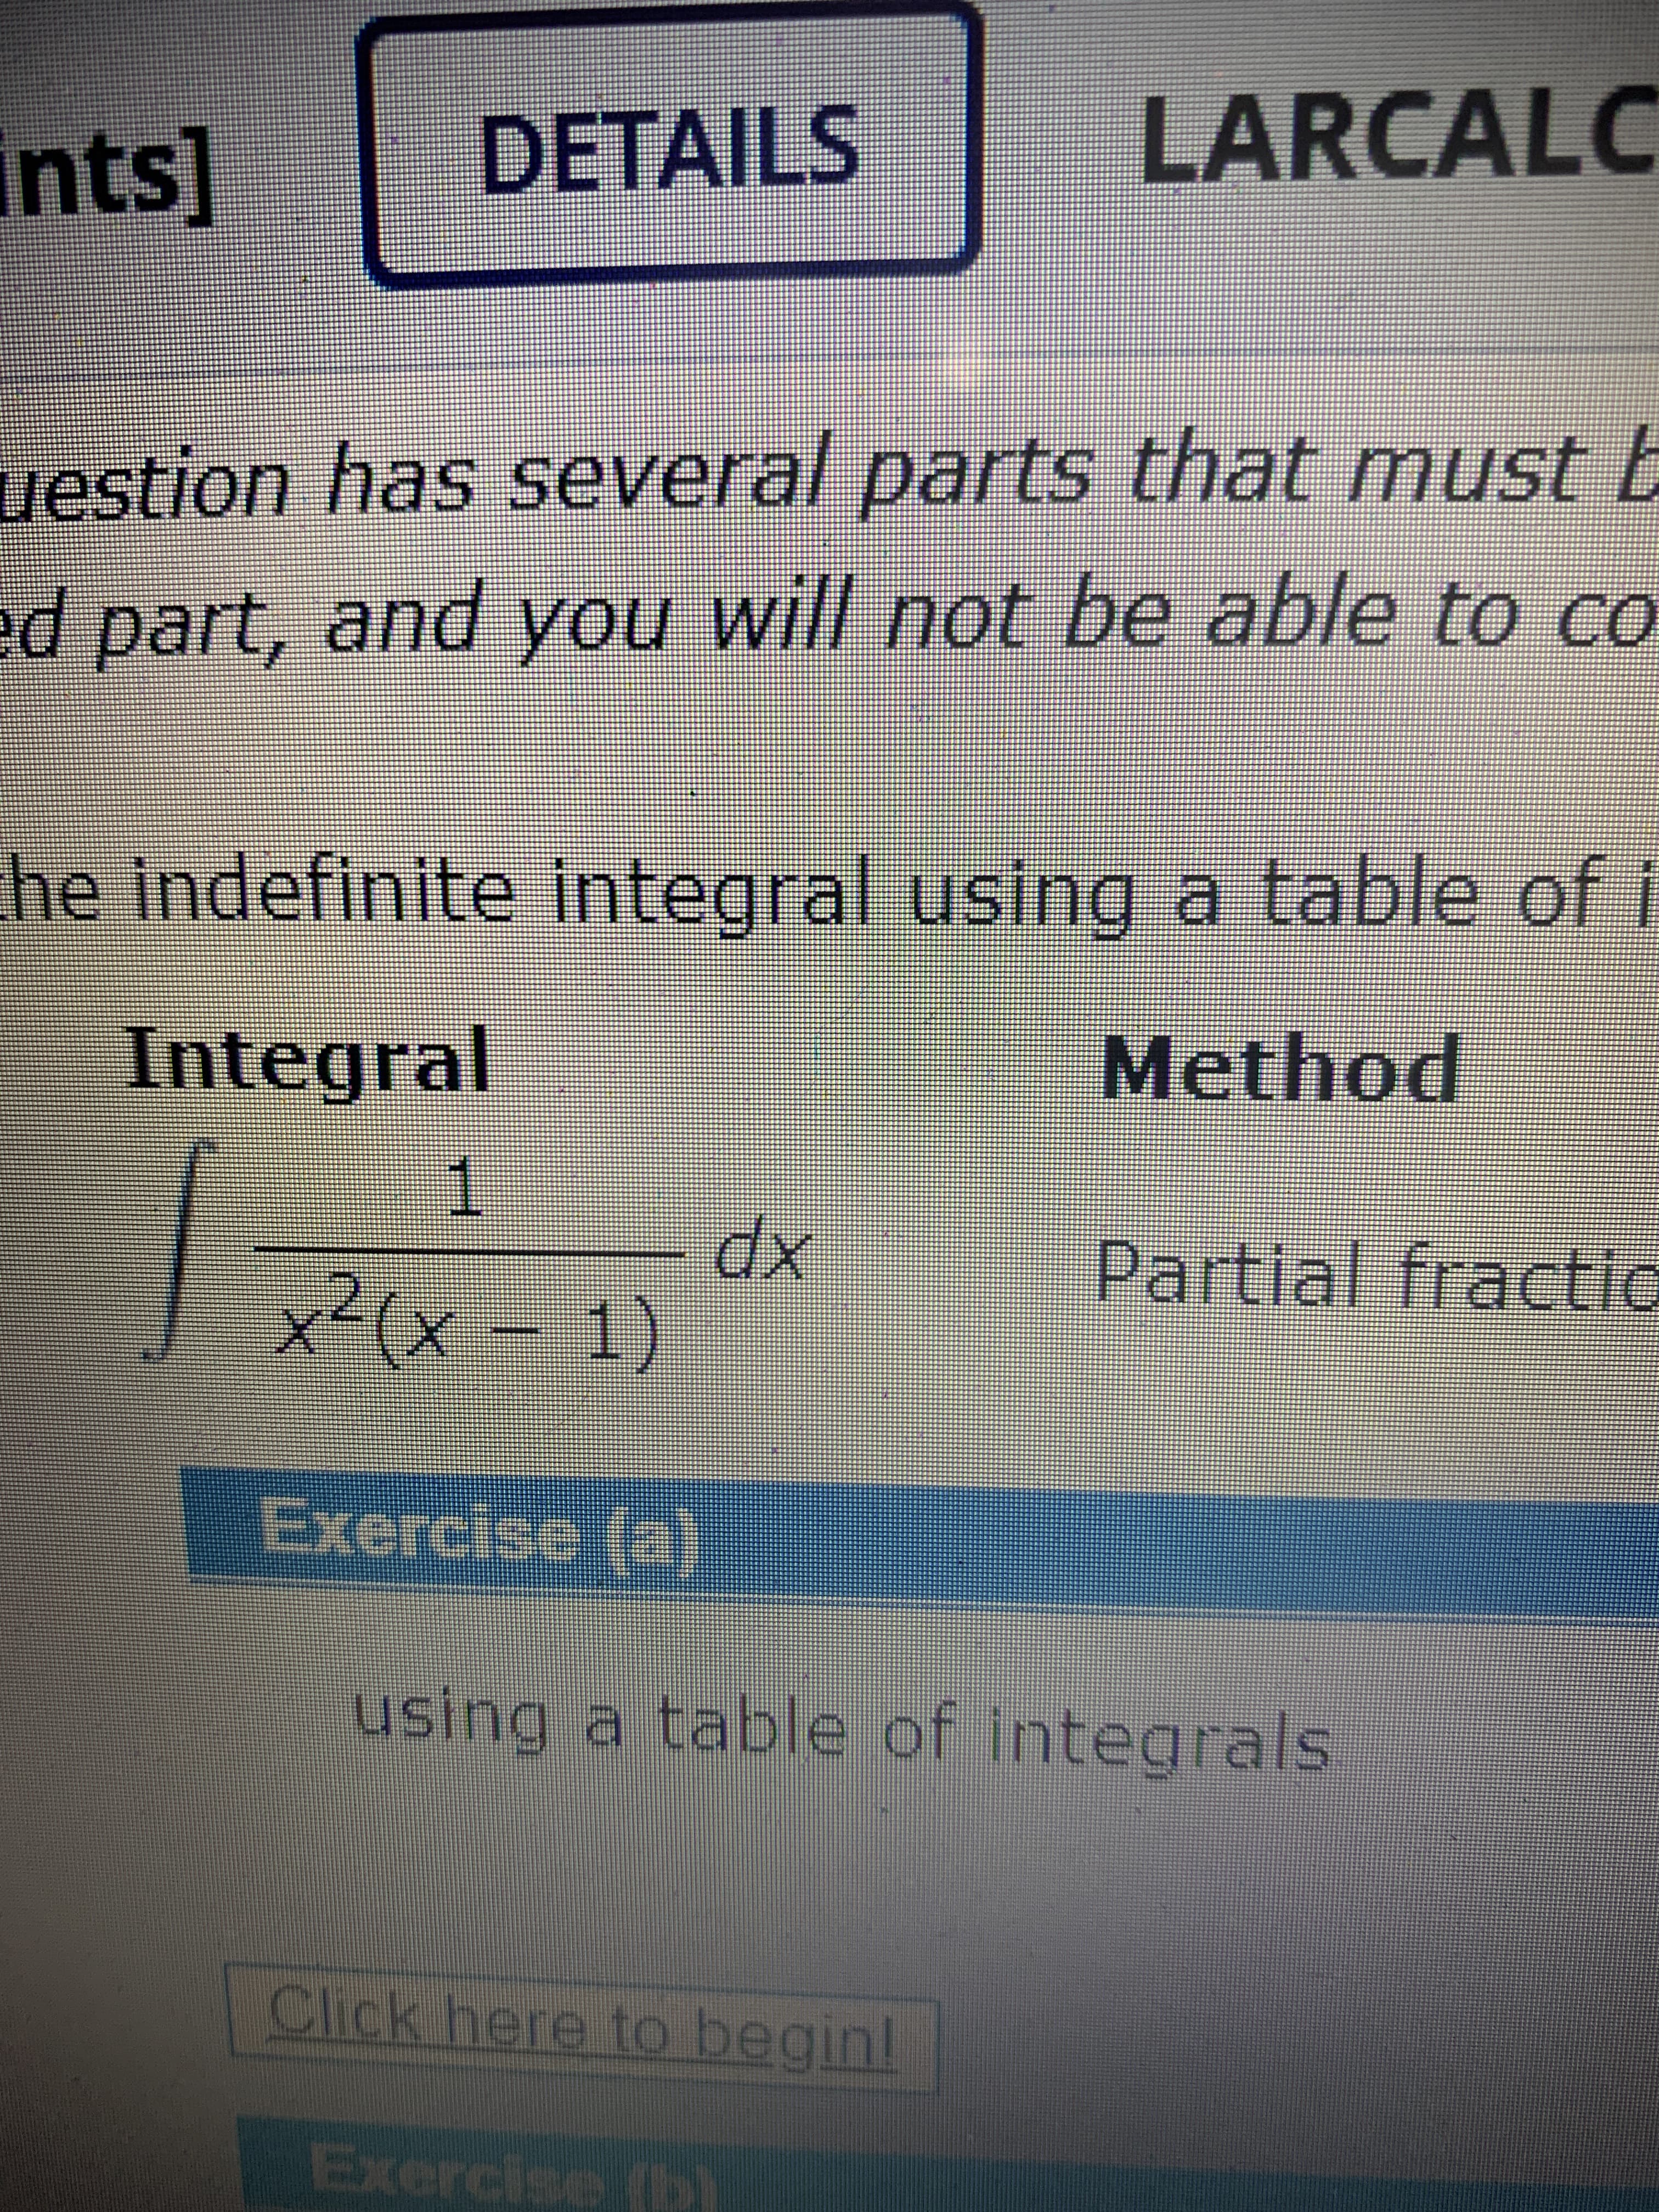 Integral
1.
xp
x²(x - 1)
